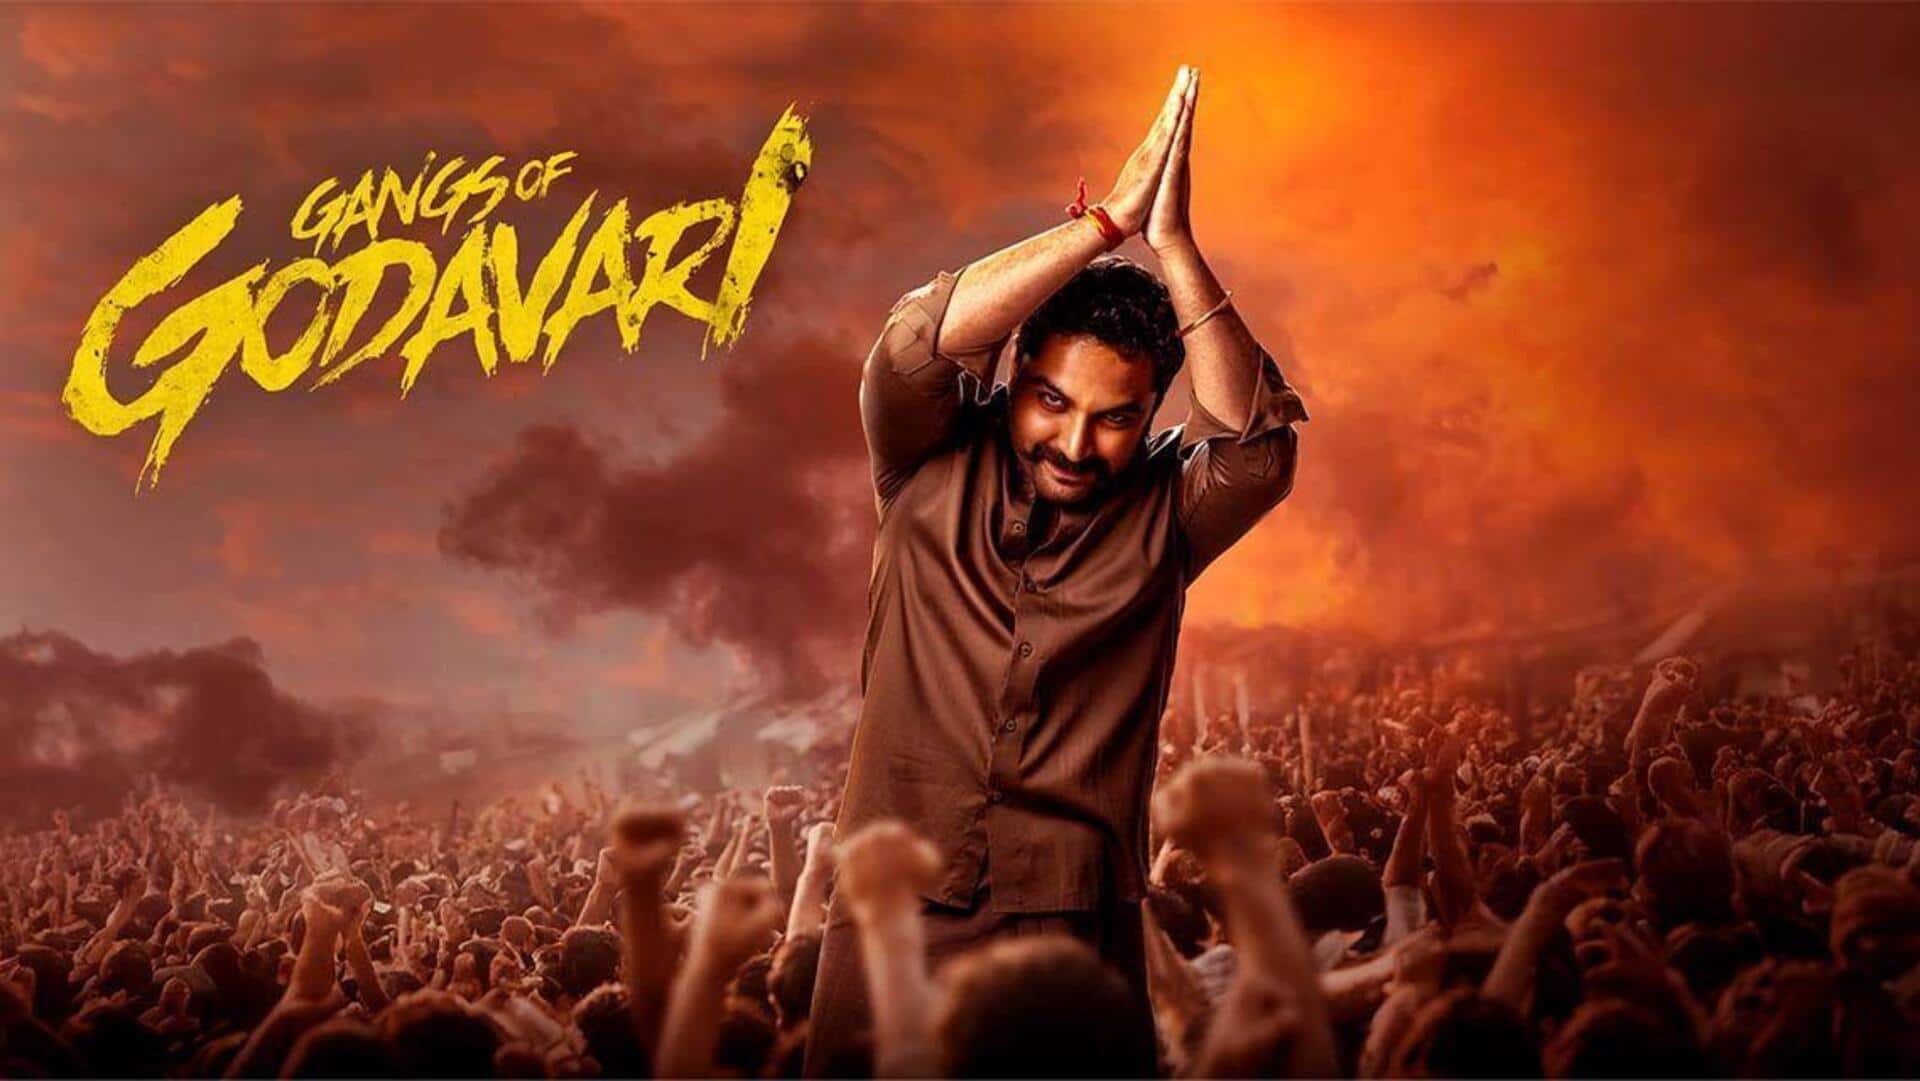 Vishwak Sen's 'Gangs of Godavari' set to premiere on Netflix